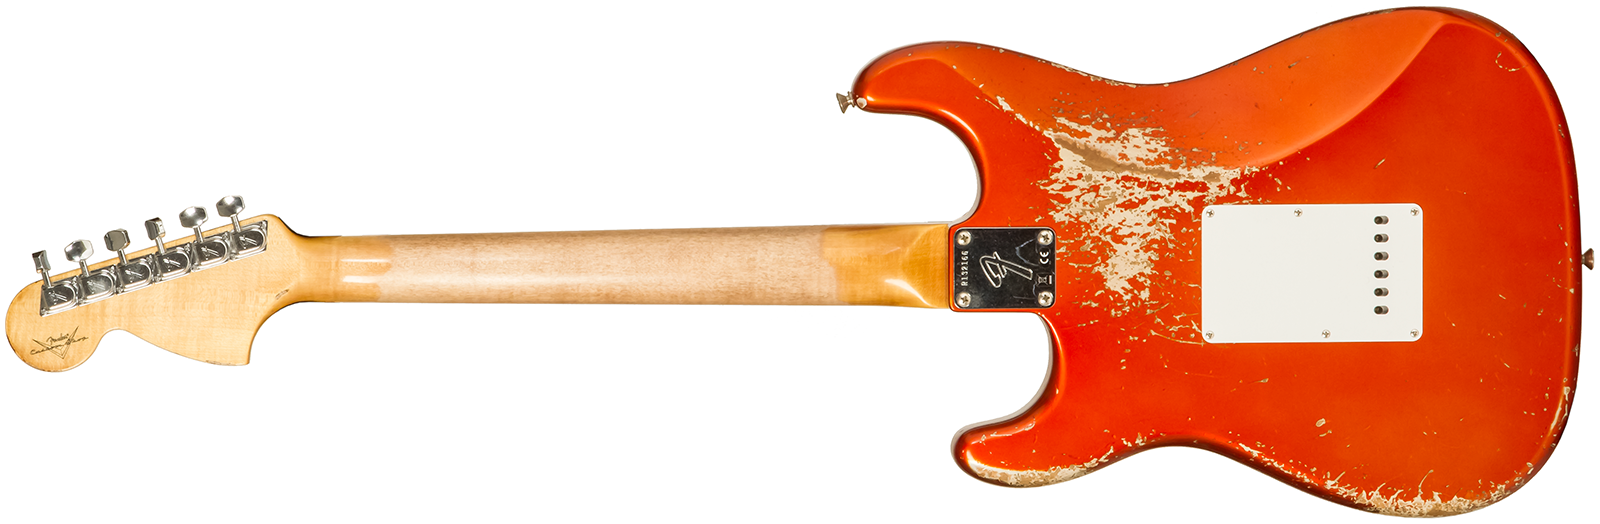 Fender Custom Shop Strat 1969 3s Trem Rw #r132166 - Heavy Relic Candy Tangerine - Guitarra eléctrica con forma de str. - Variation 1